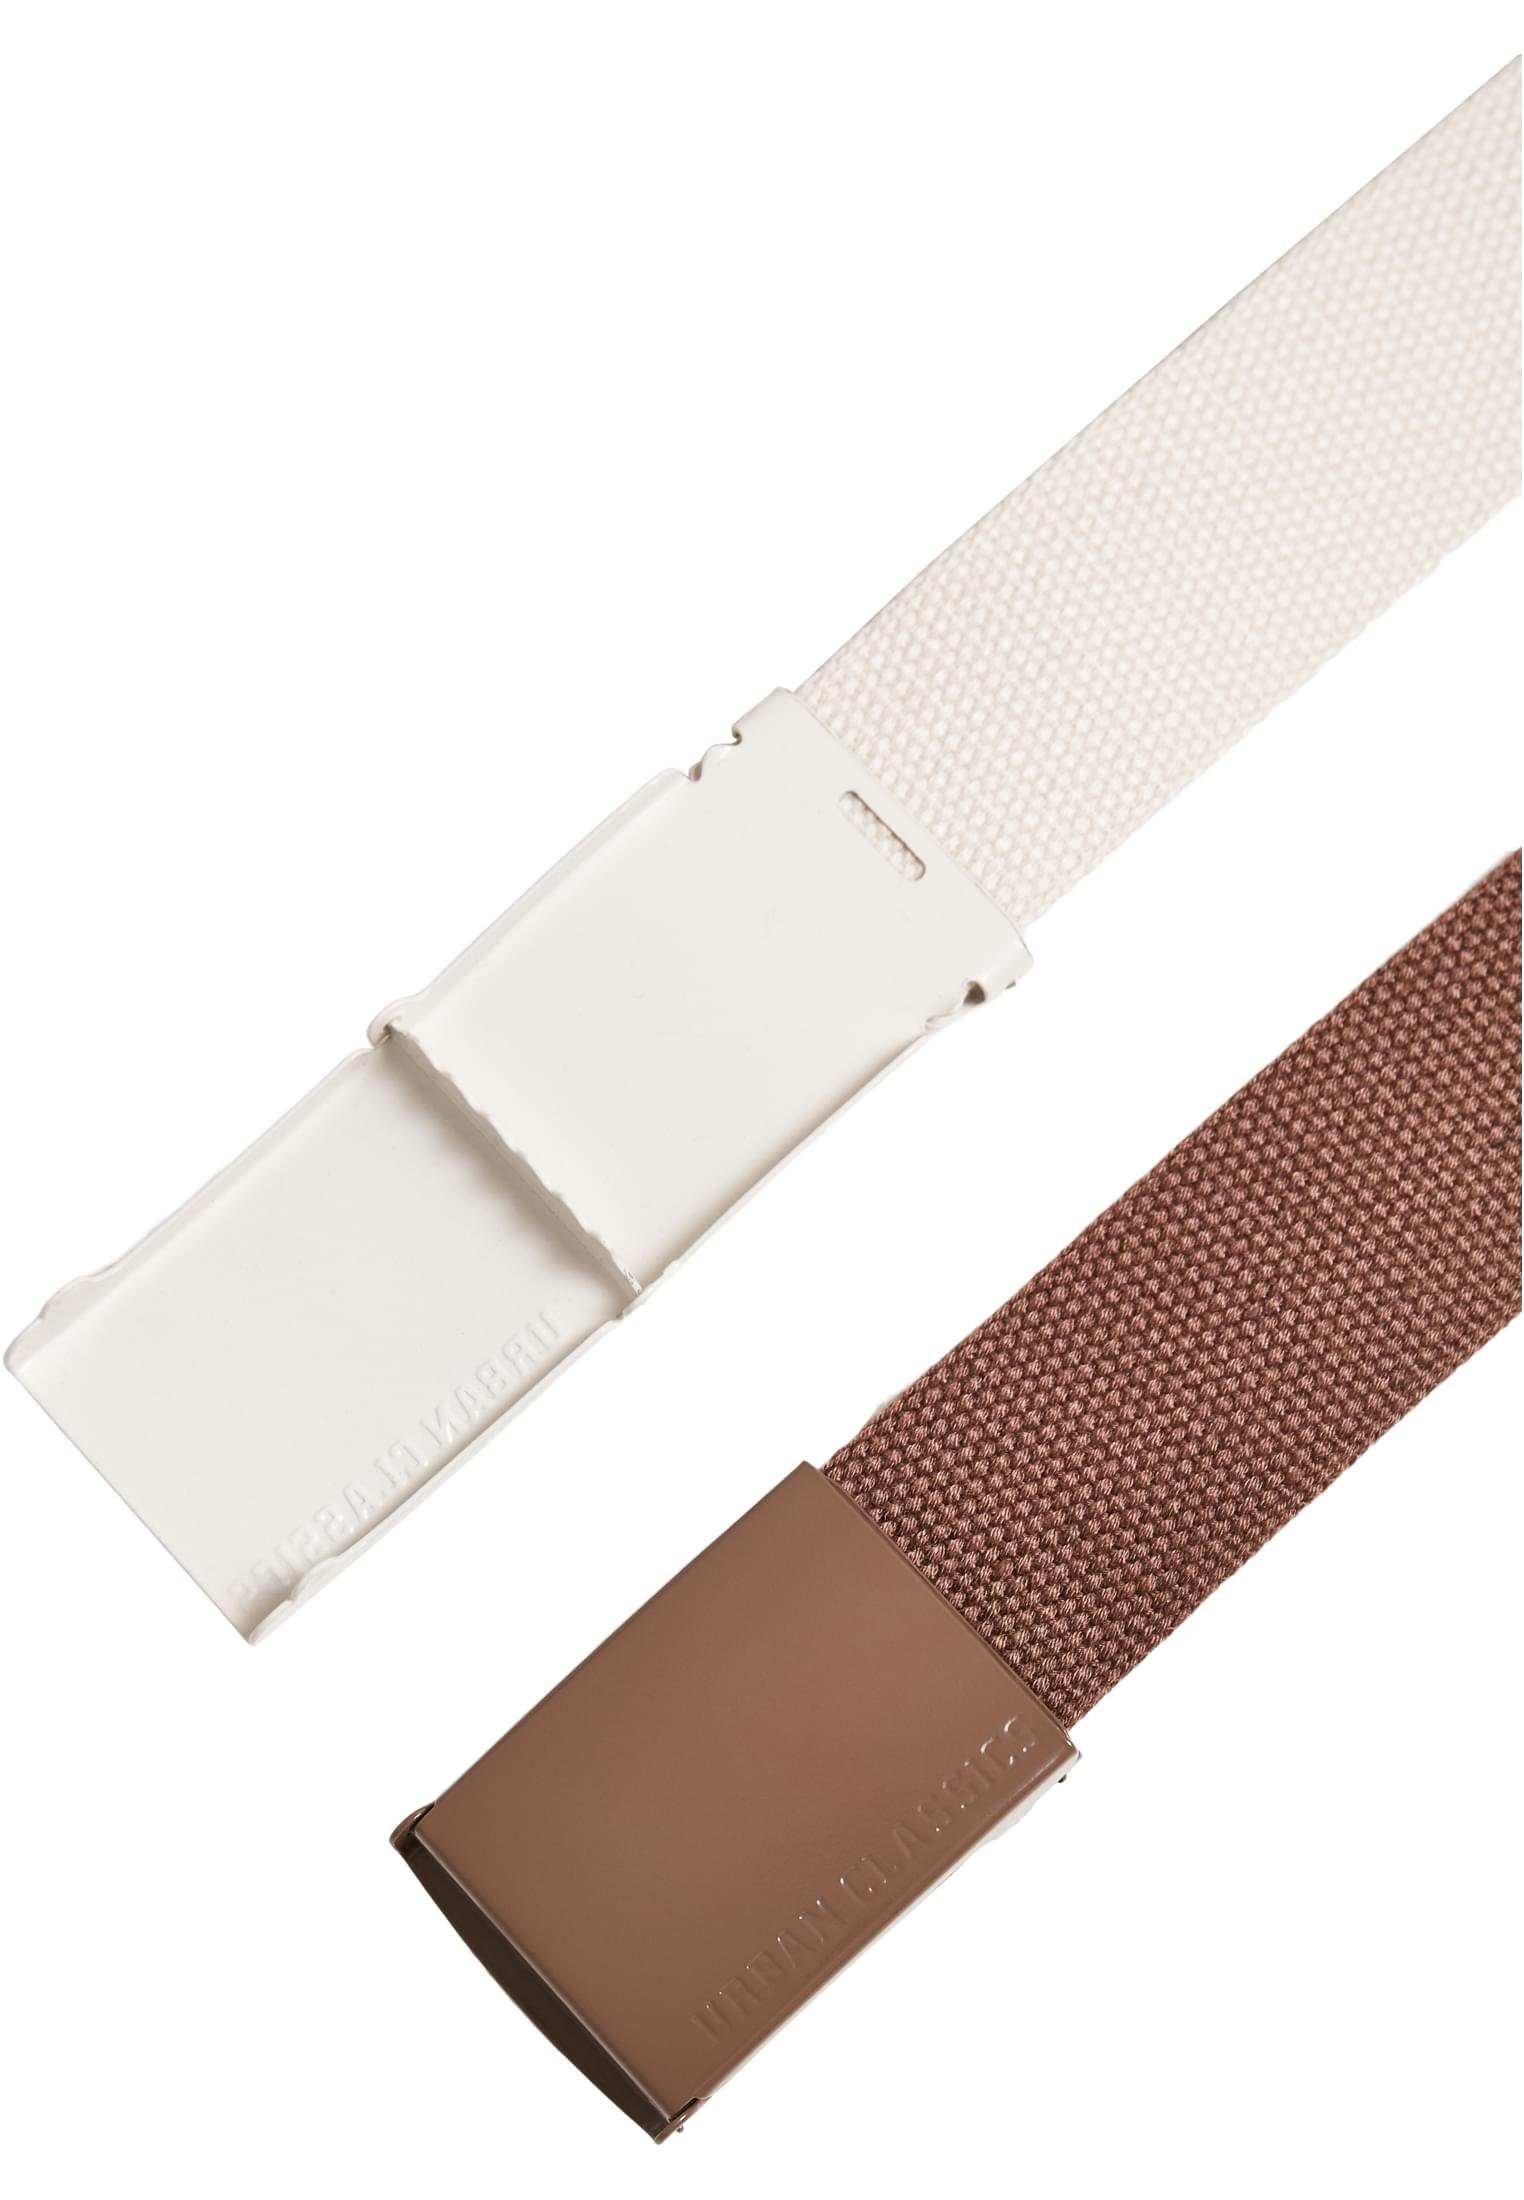 Buckle Accessoires Hüftgürtel 2-Pack Colored Canvas Belt URBAN CLASSICS bark-whitesand